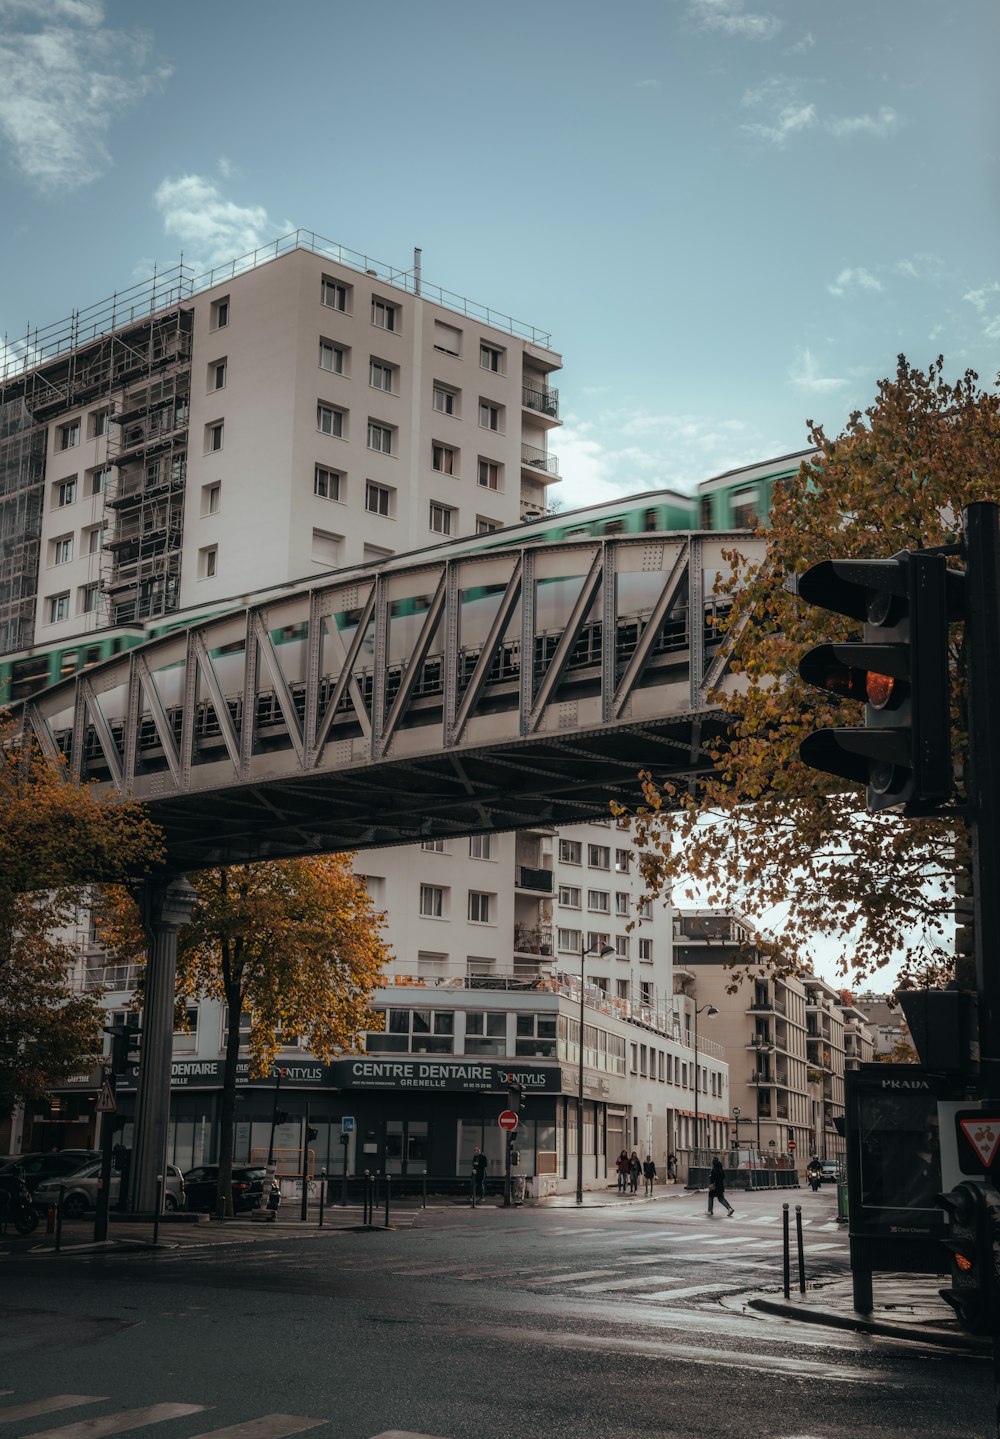 a train crossing a bridge over a city street